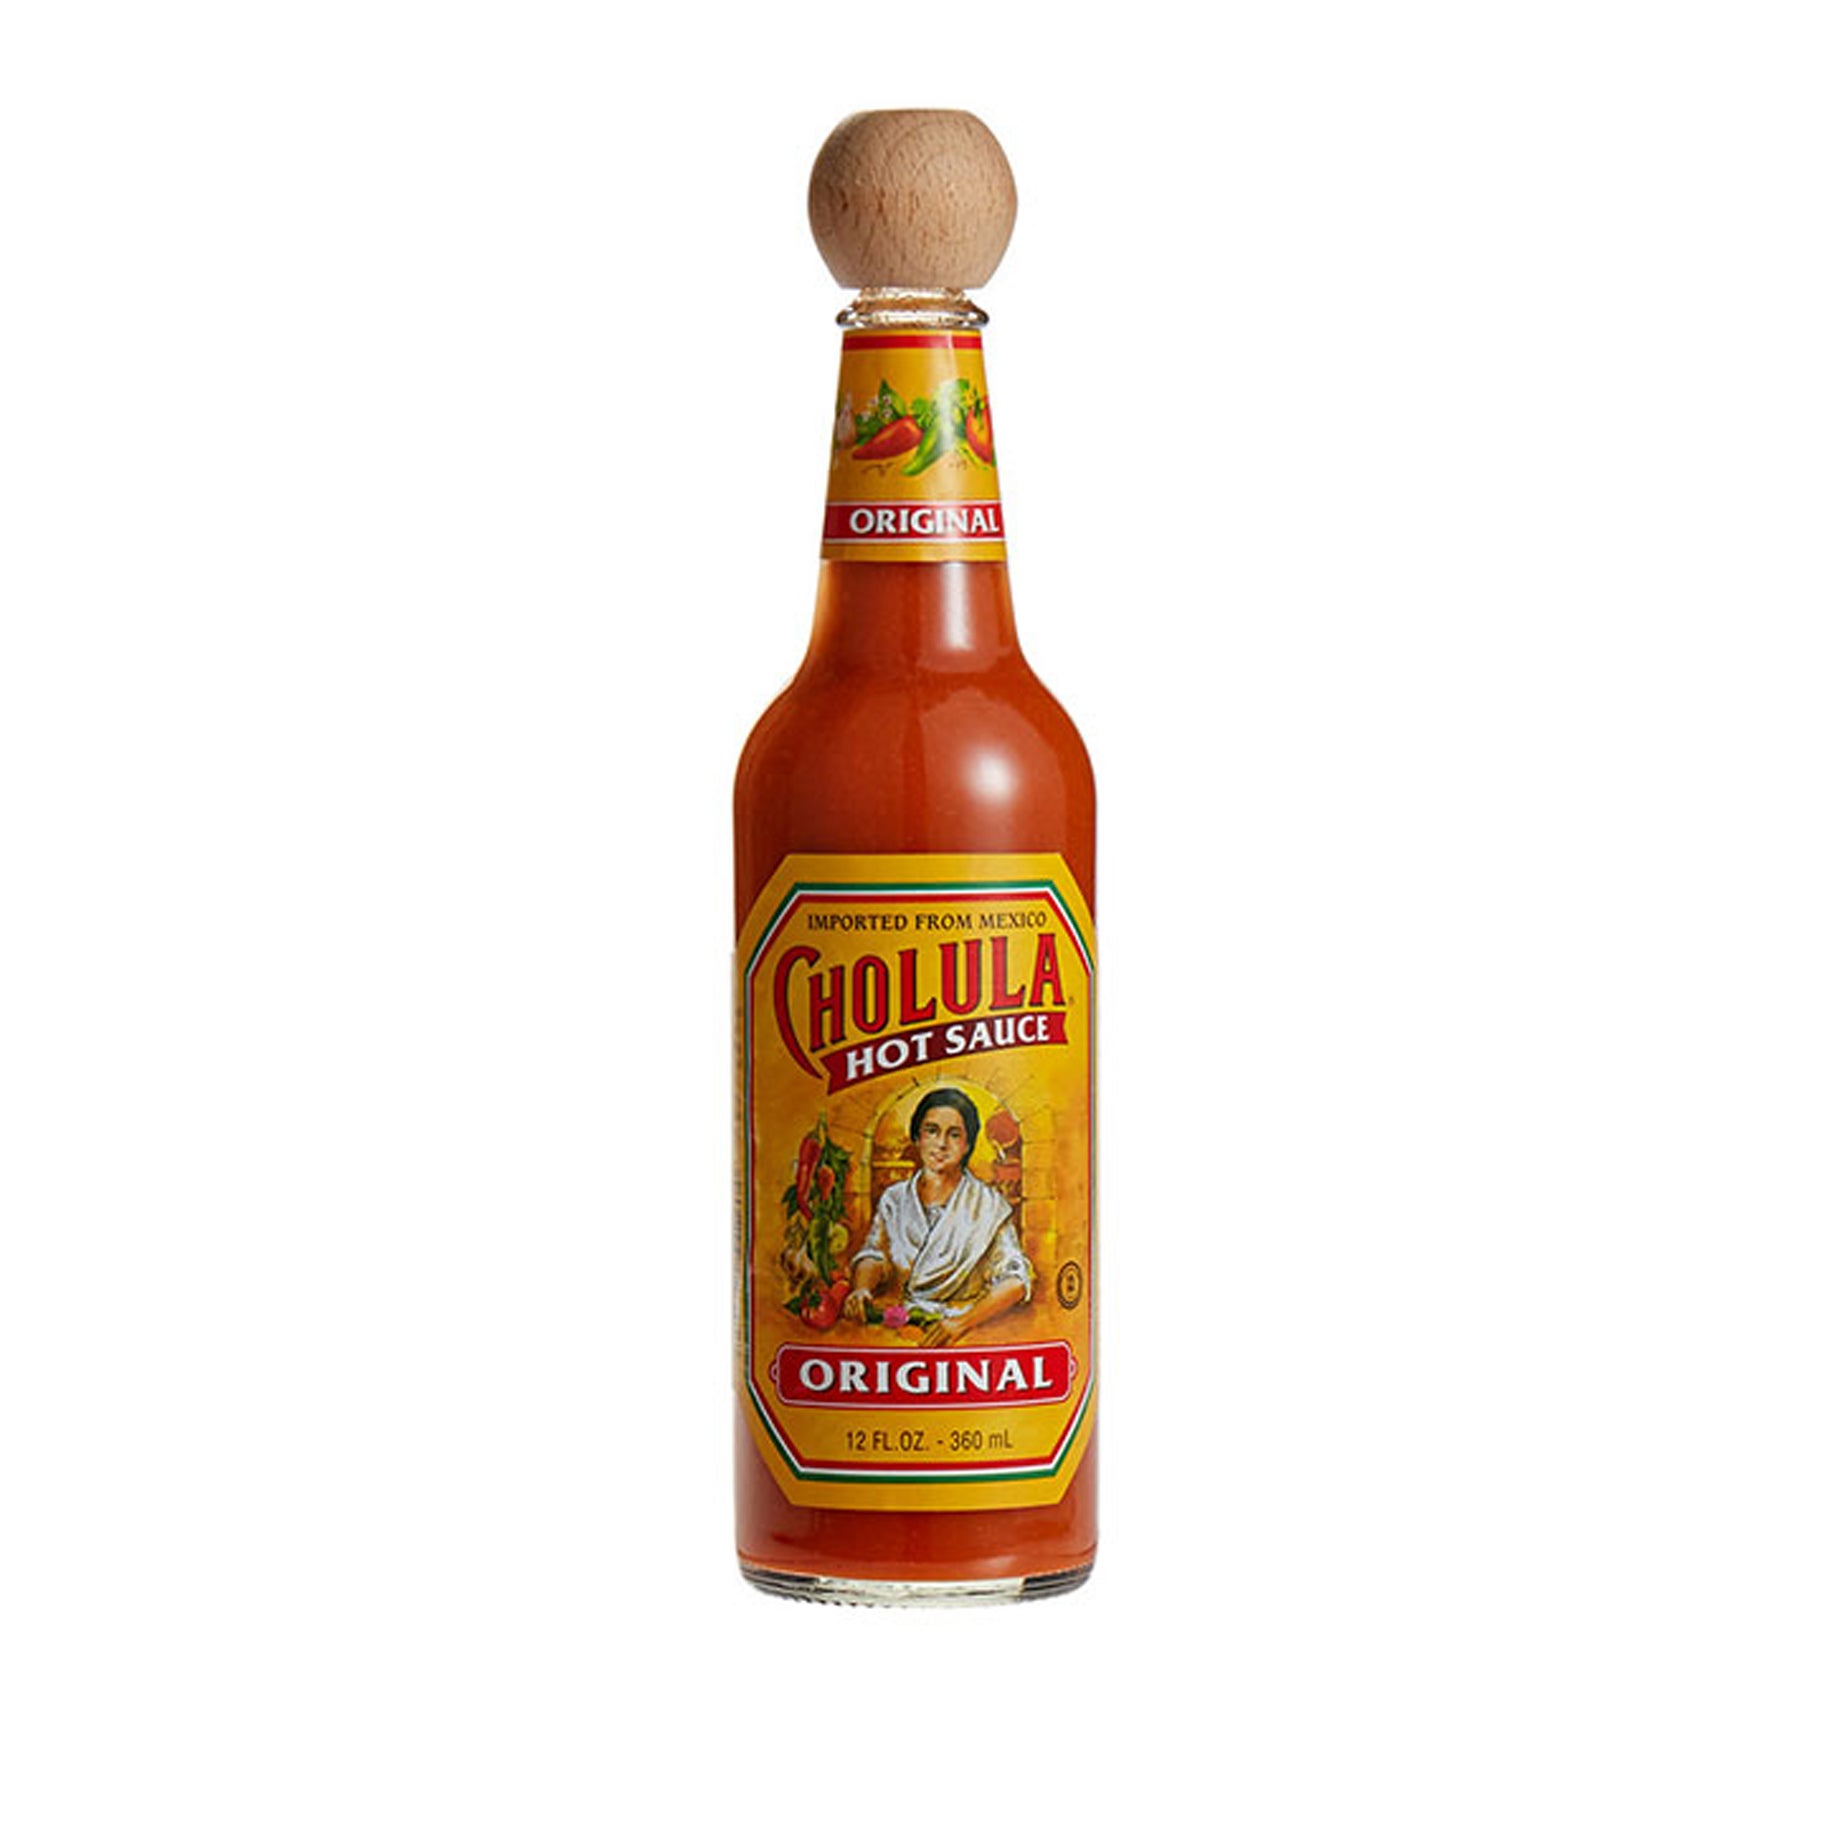 The Best Hot Sauces Option: Cholula Original